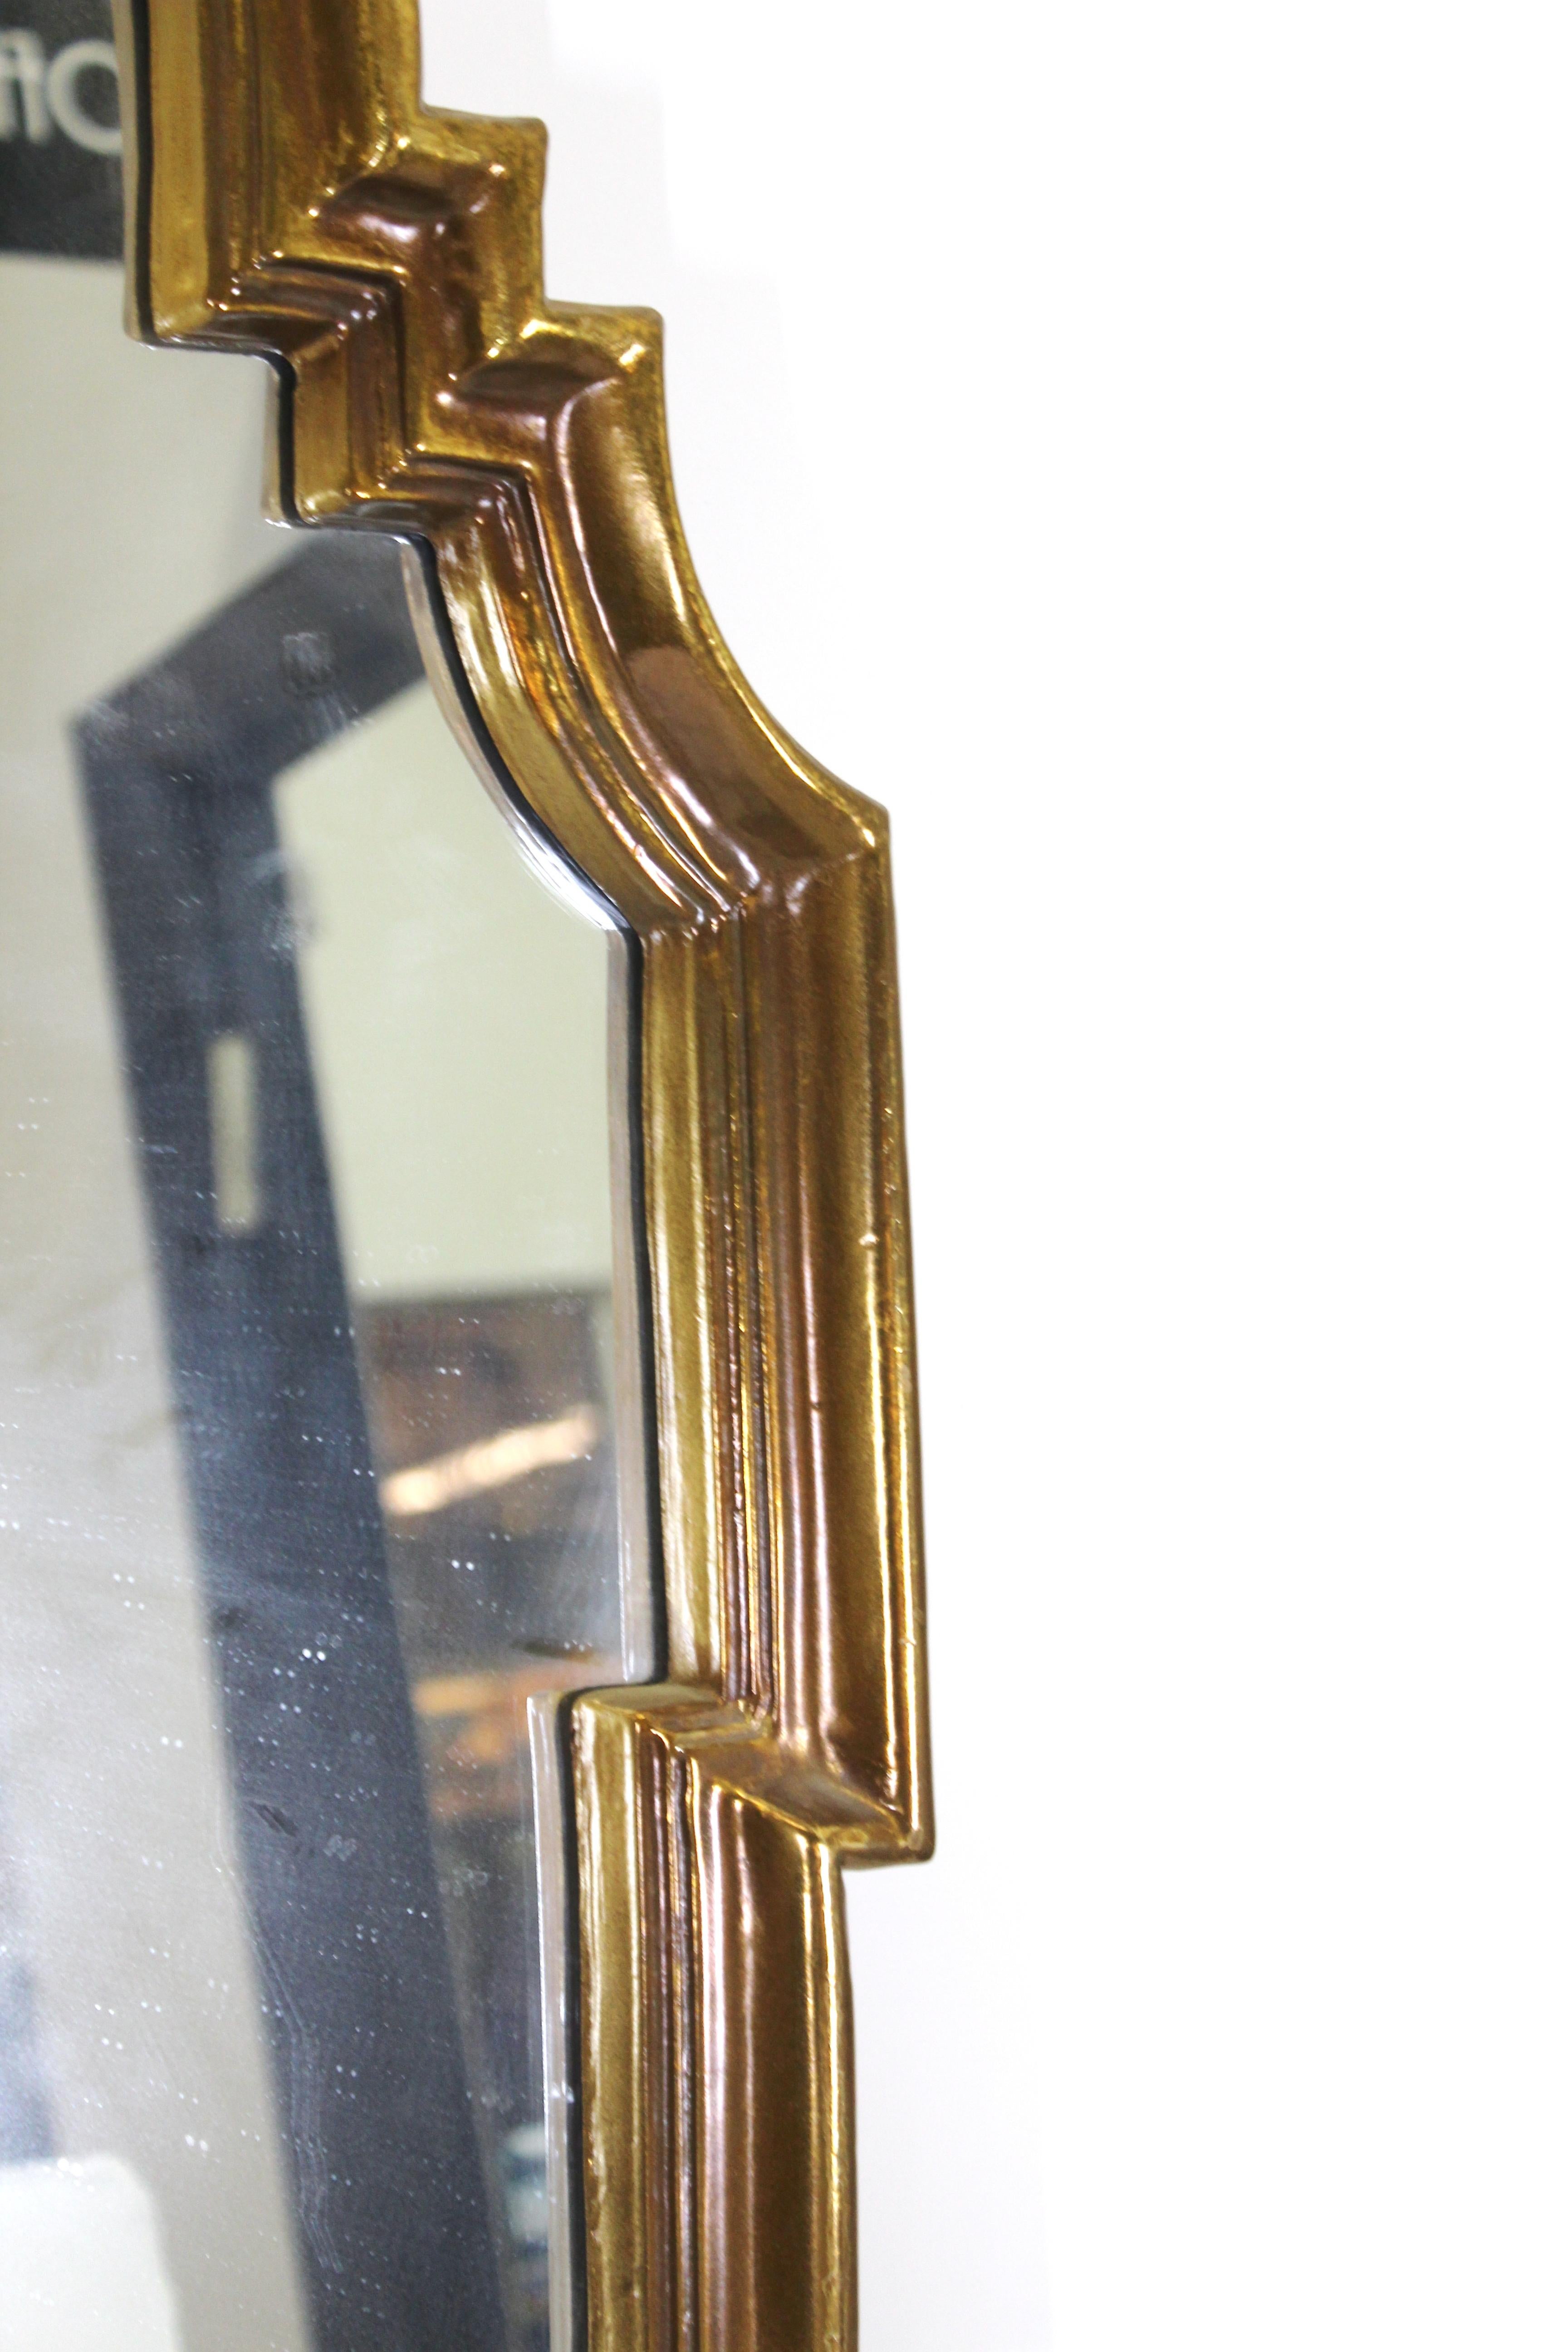 20th Century Hollywood Regency Style Wall Mirror